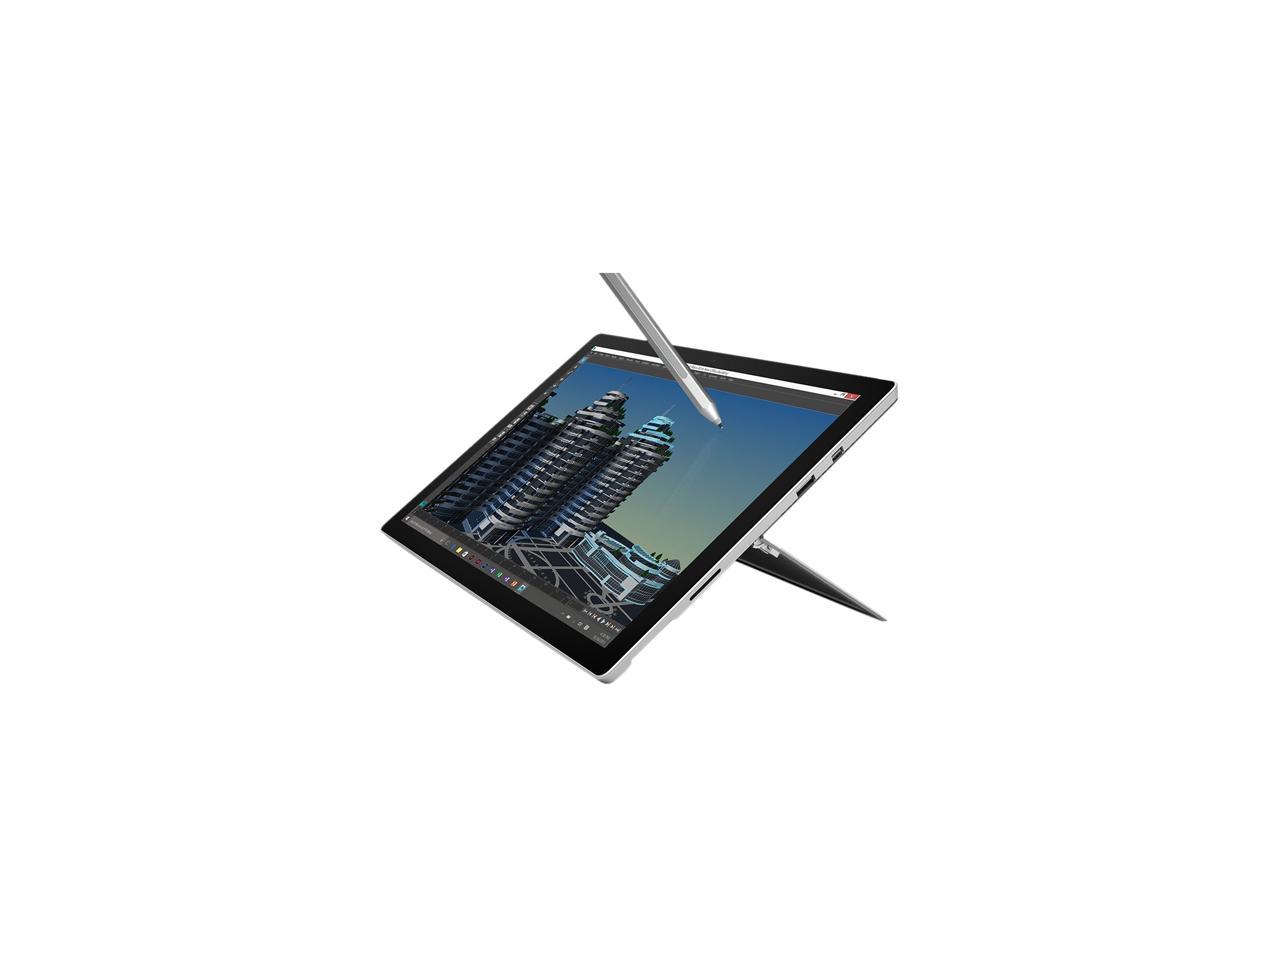 Microsoft Surface Pro 4 SU9-00001 Tablet Intel Core i7 6600U (2.60 